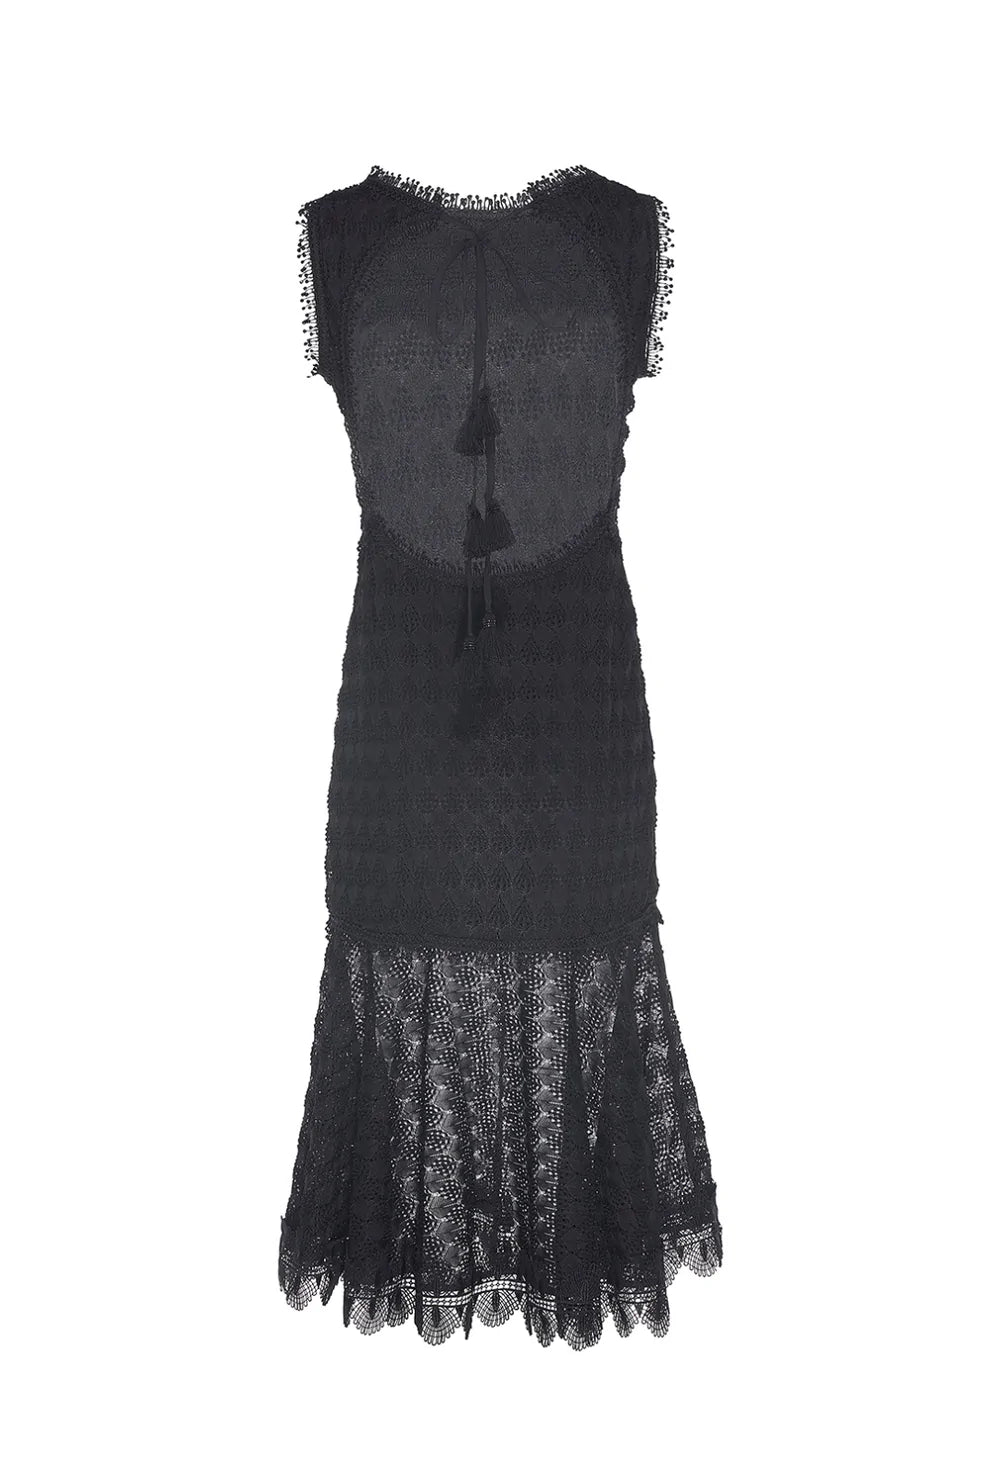 Waimari Lluvia Dress - Premium  from Marina St Barth - Just $350! Shop now at Marina St Barth